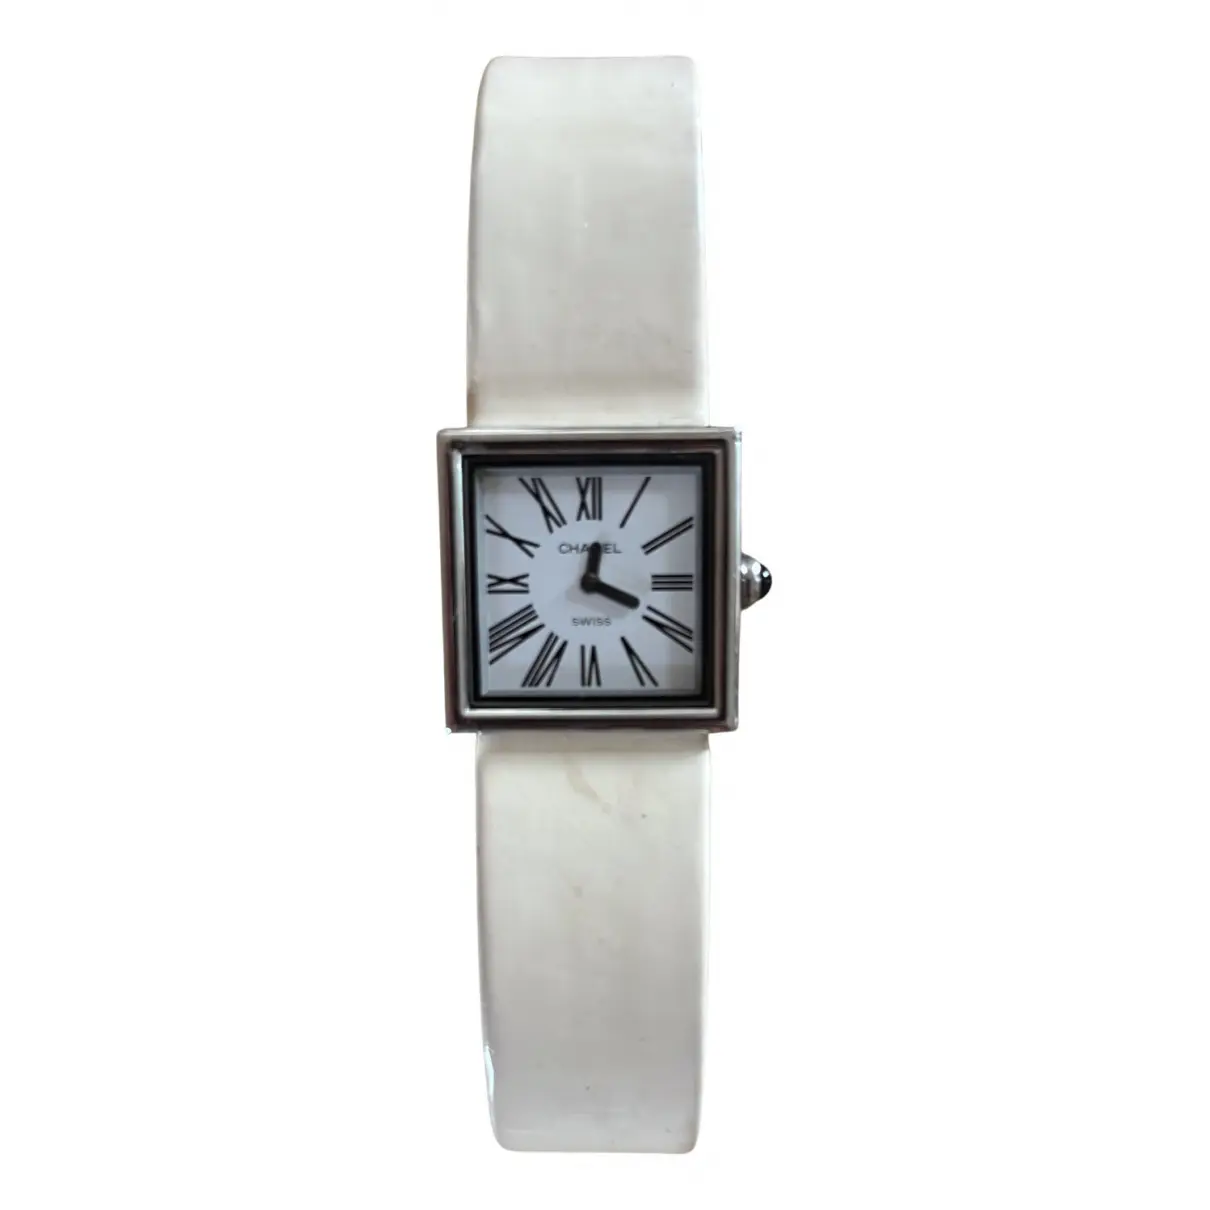 Mademoiselle silver watch Chanel